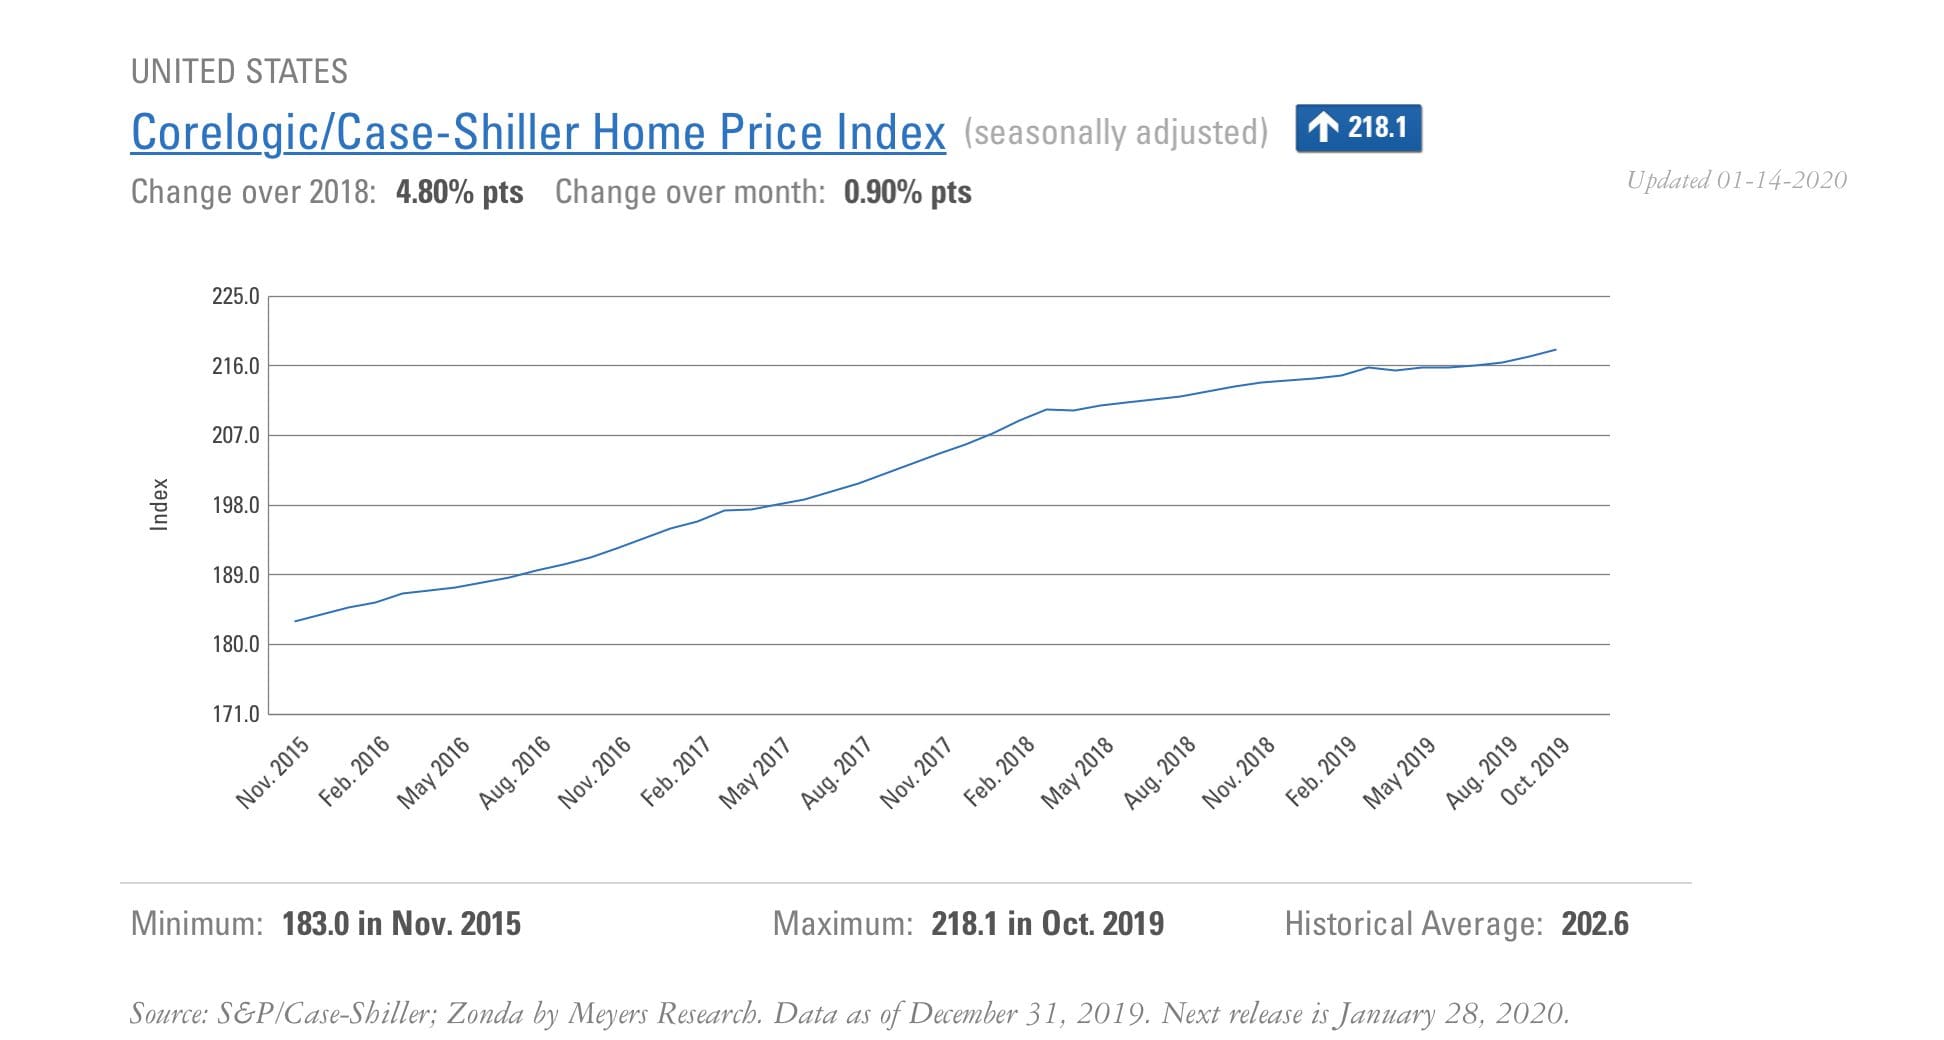 United States CorelogicCase-Shiller Home Price Index